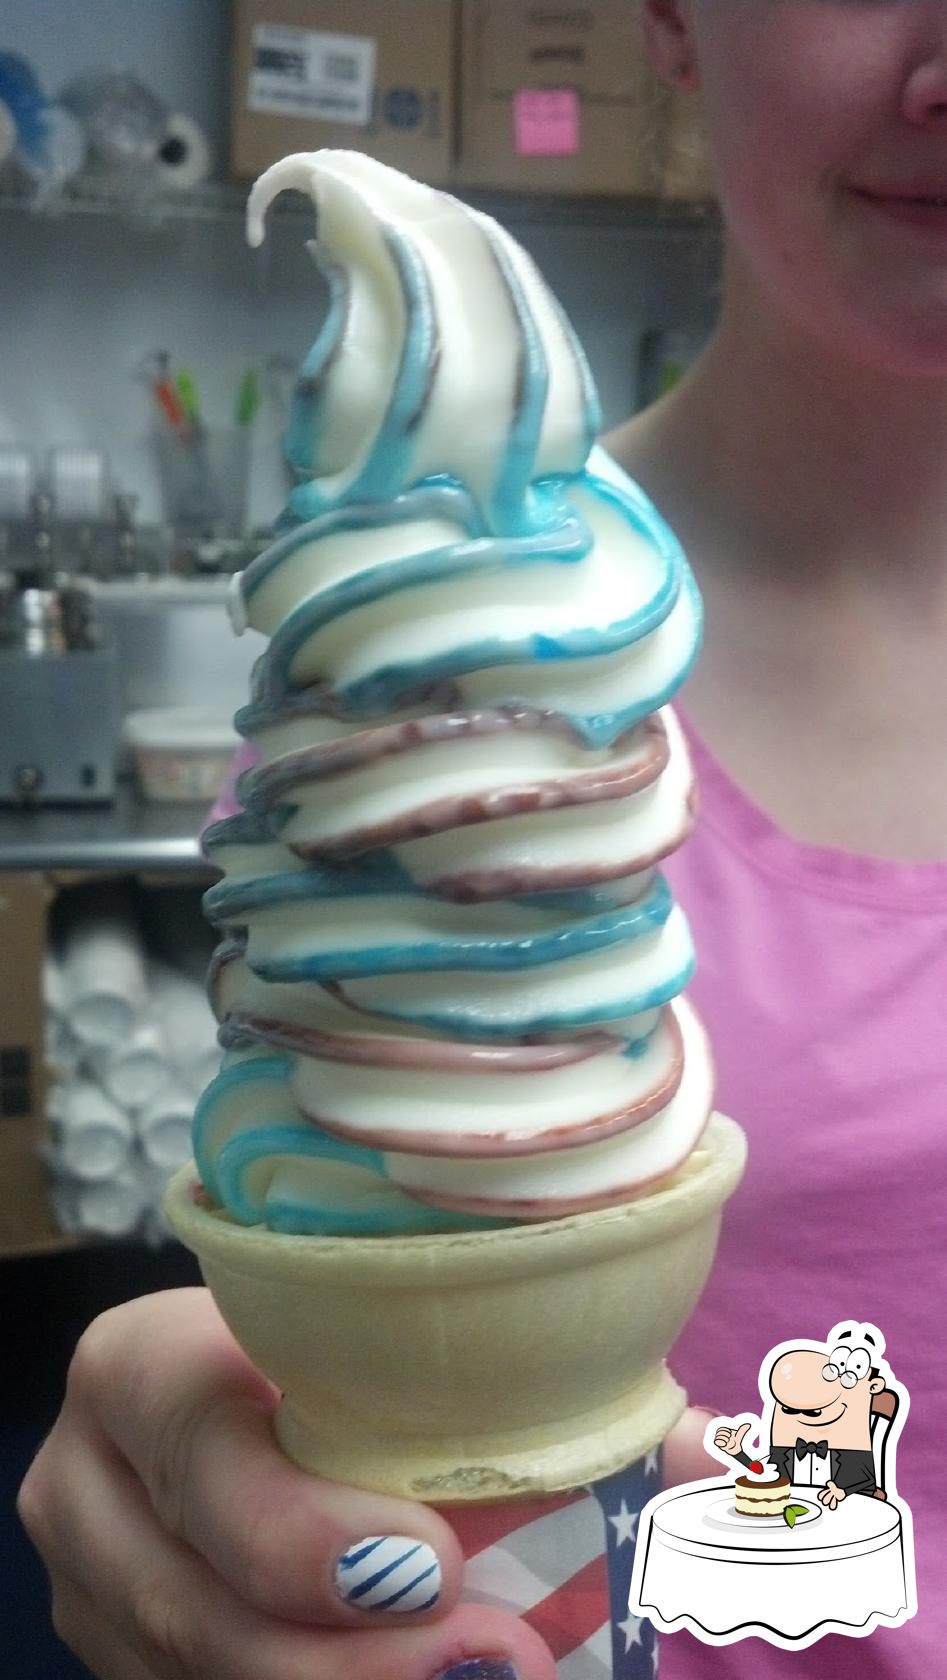 Happy Cow Ice Cream Shop, LLC - Blue goo is back!